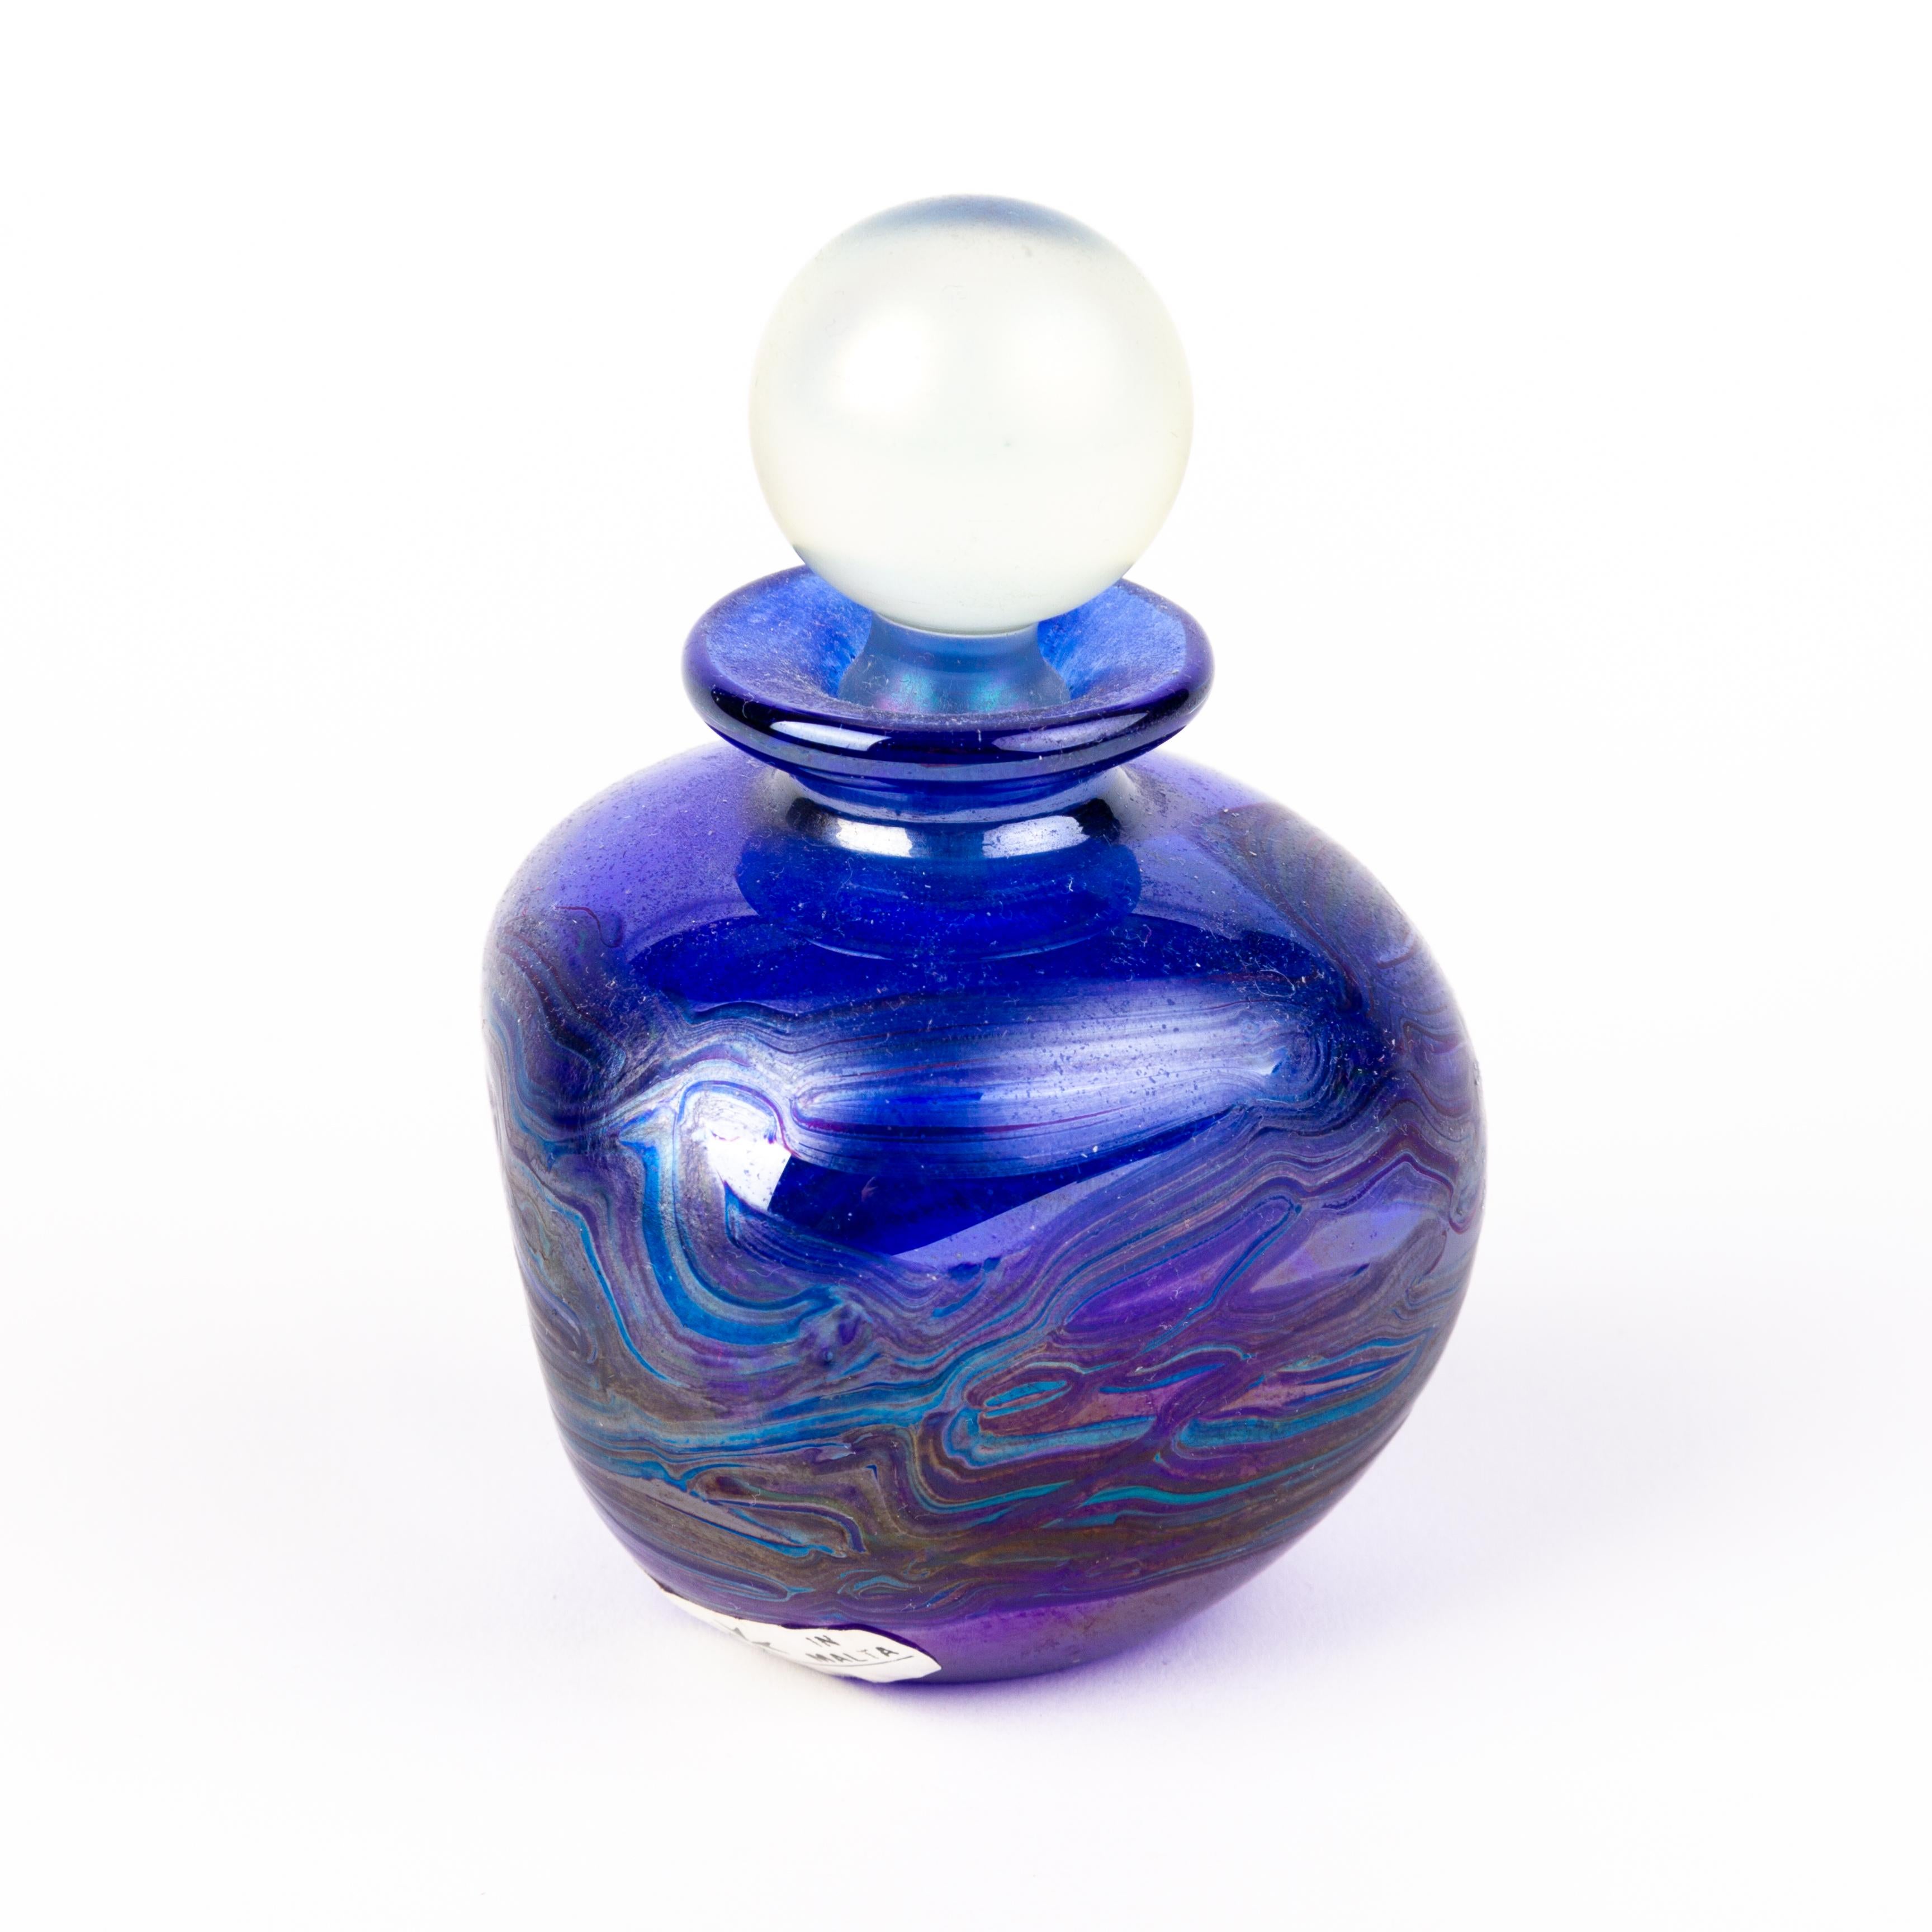 Iridescent Maltese Designer Glass Perfume Bottle
Good condition
Free international shipping.